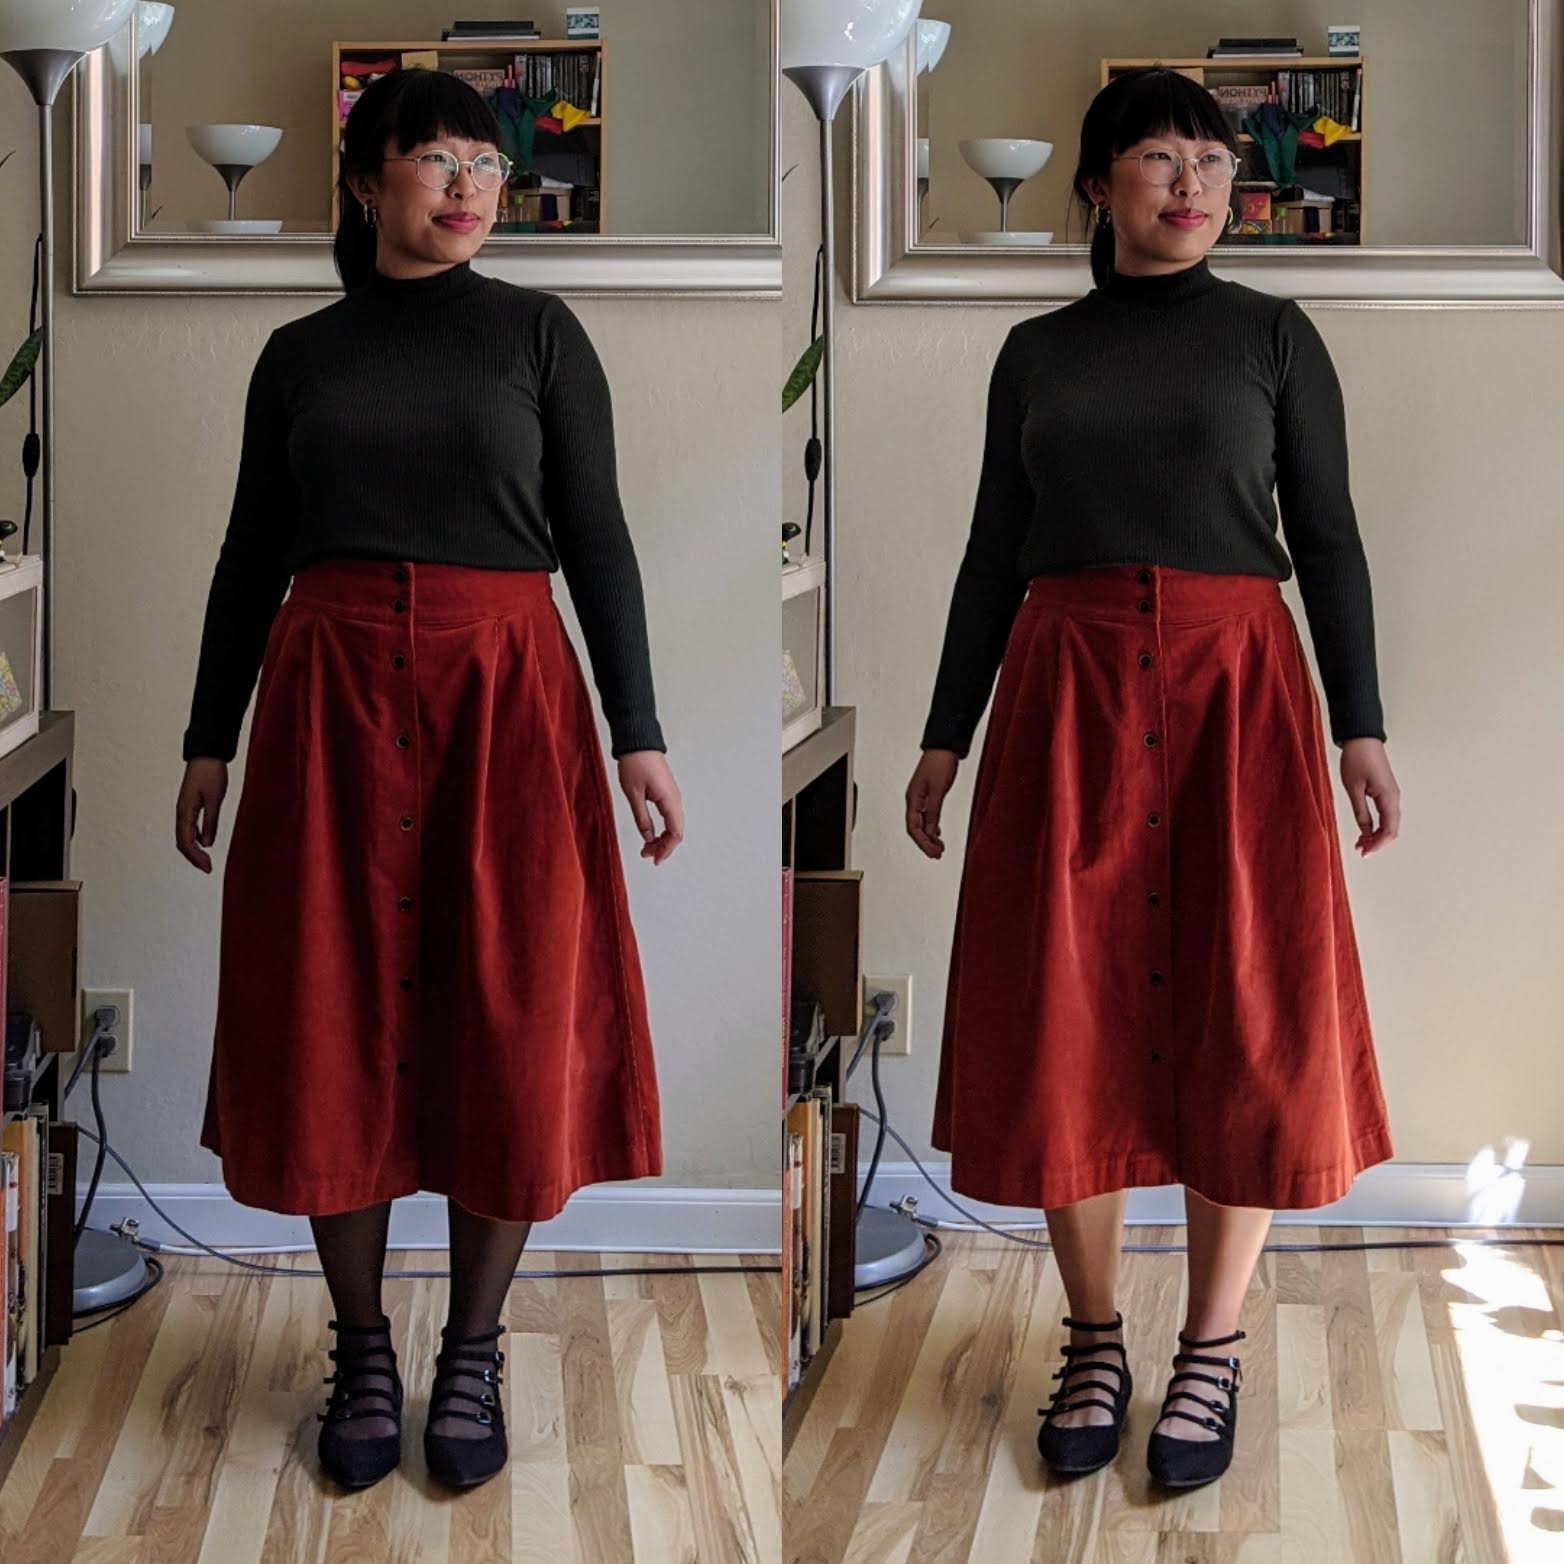 midi skirts strappy flats tights vs bare